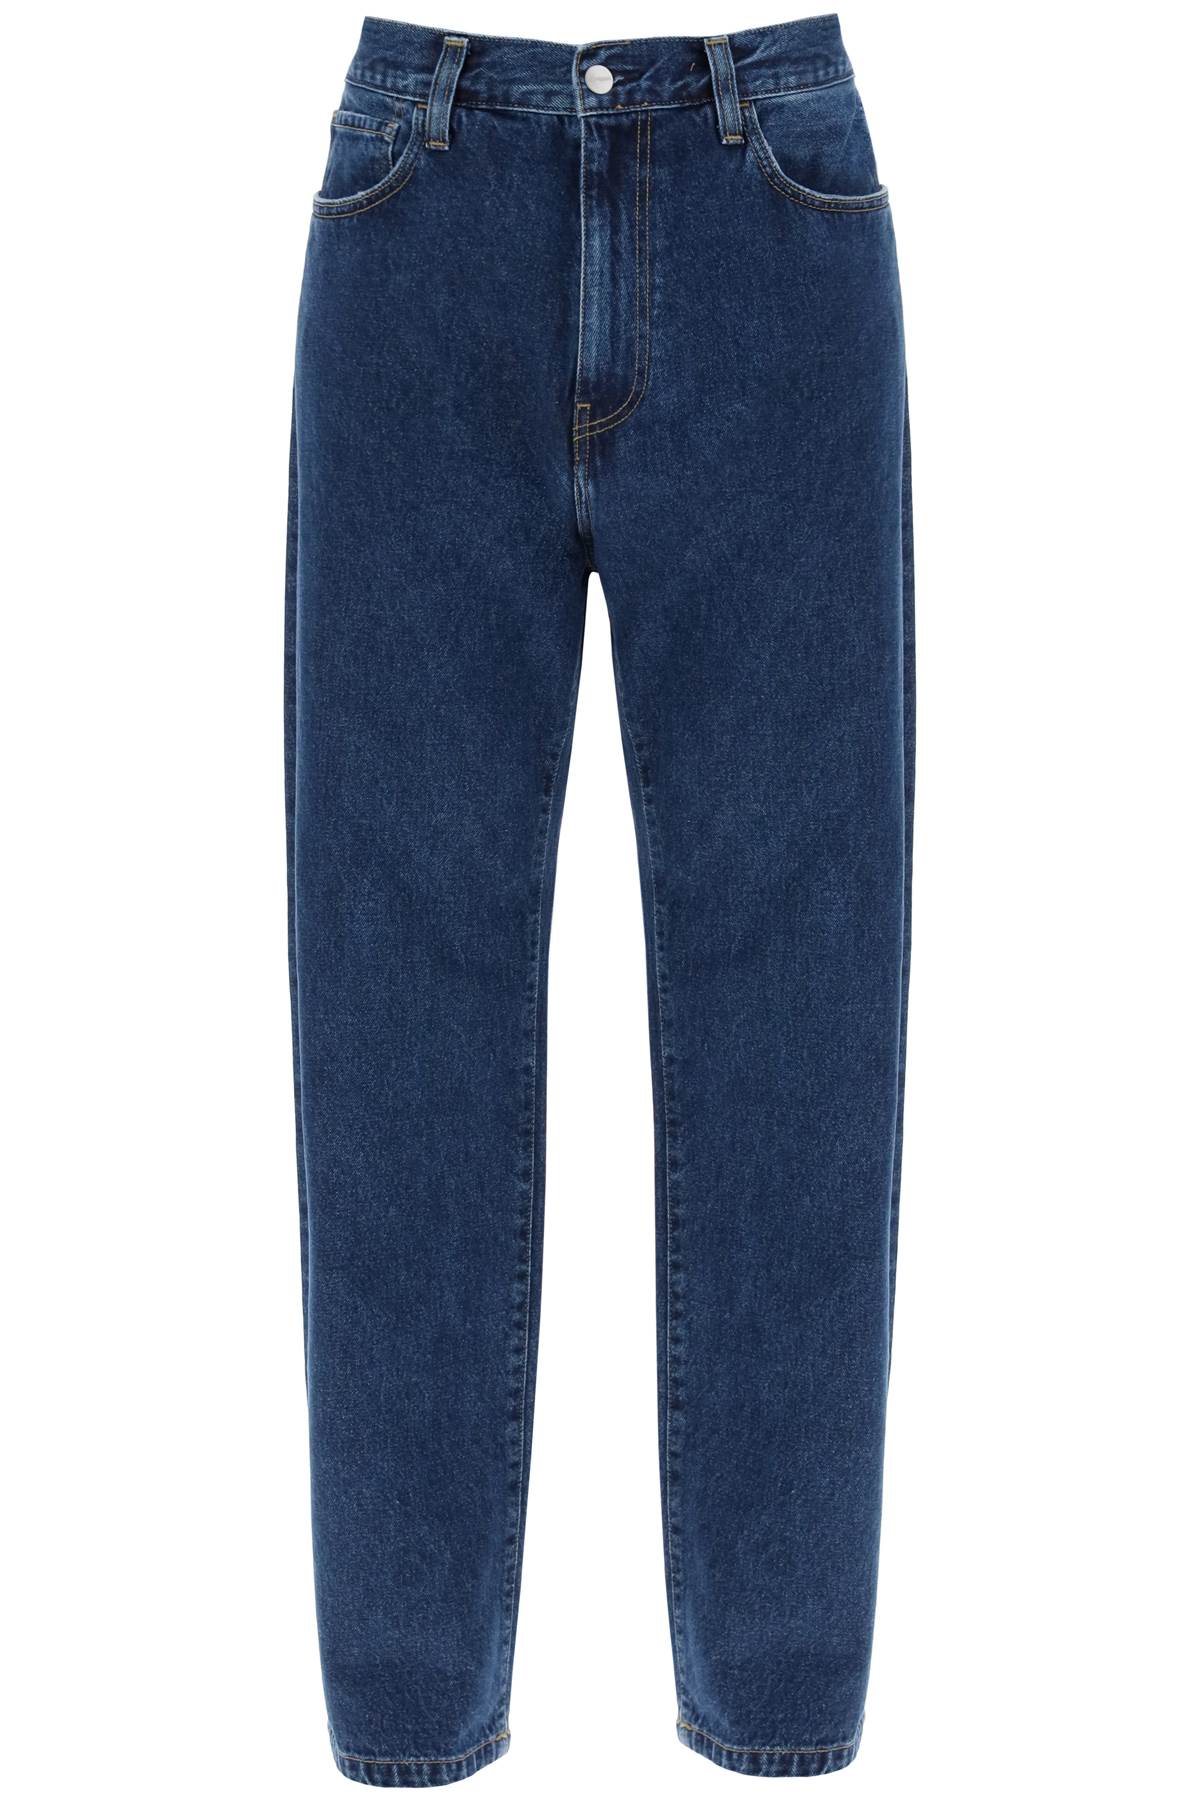 Carhartt Wip Landon Loose Fit Jeans   Blue